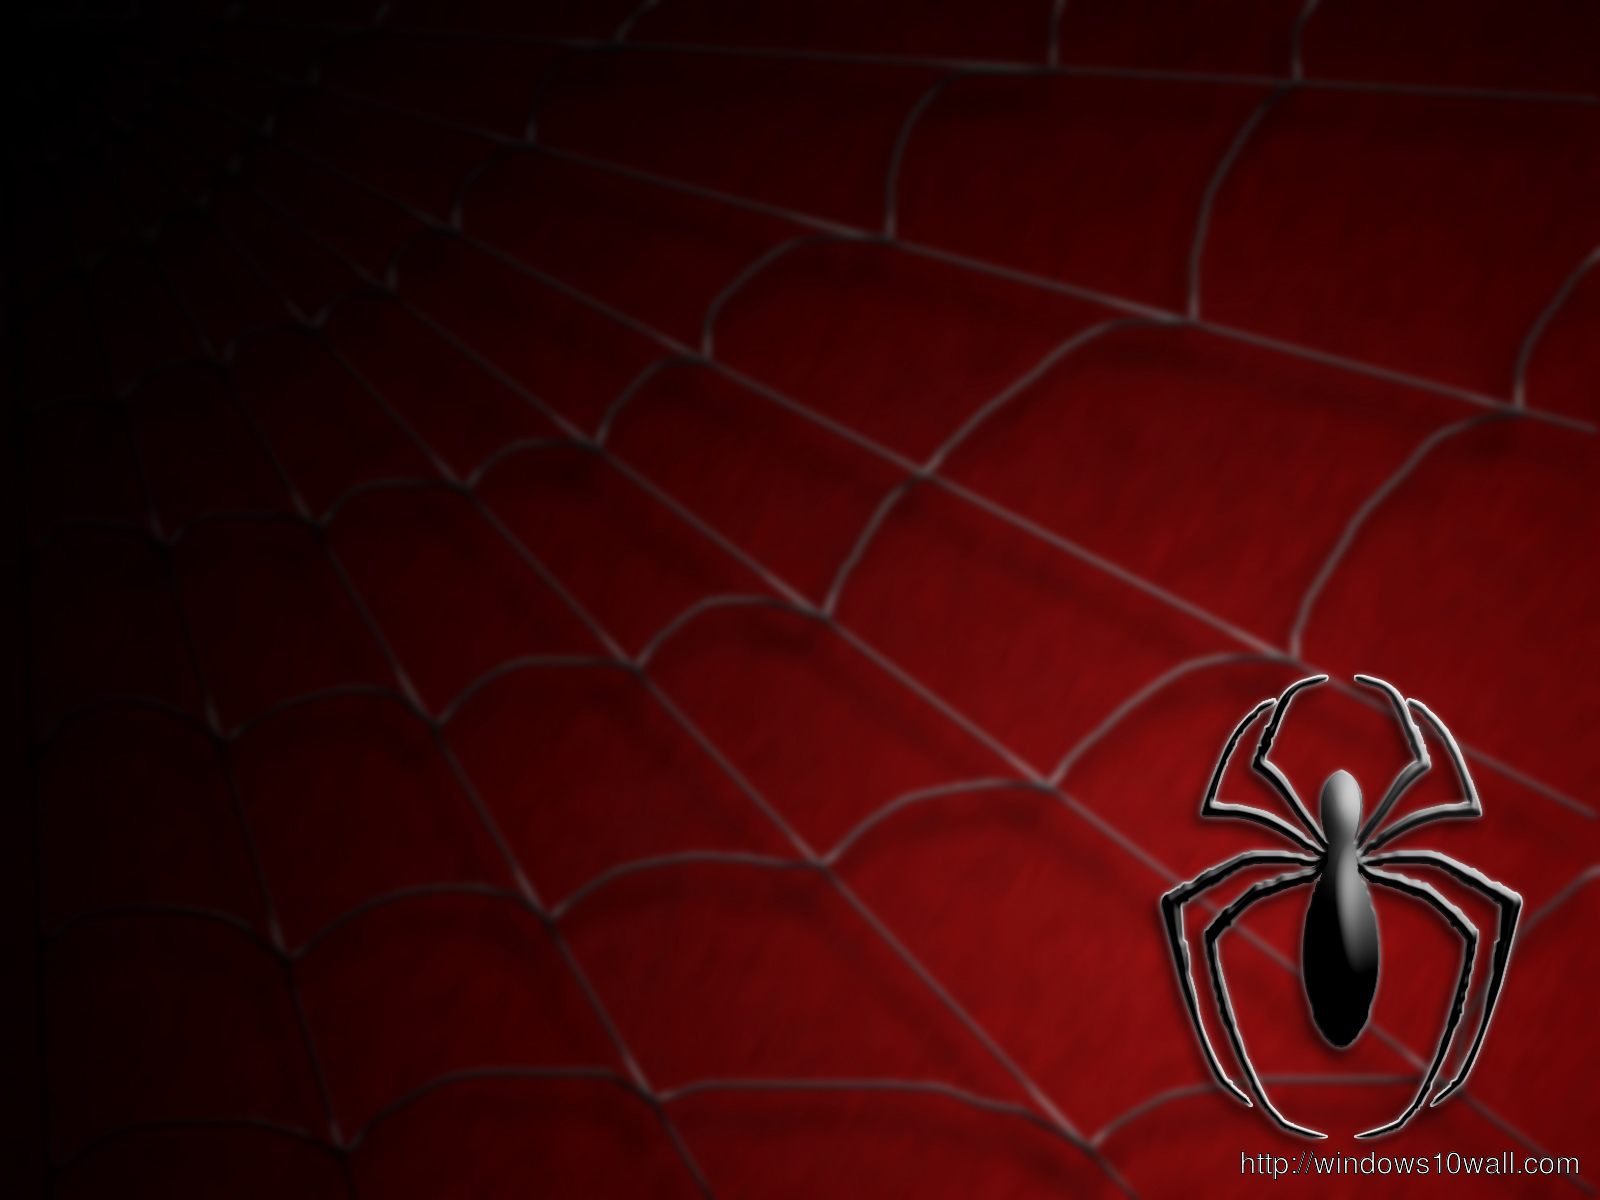 Spiderman background wallpaper widescreen